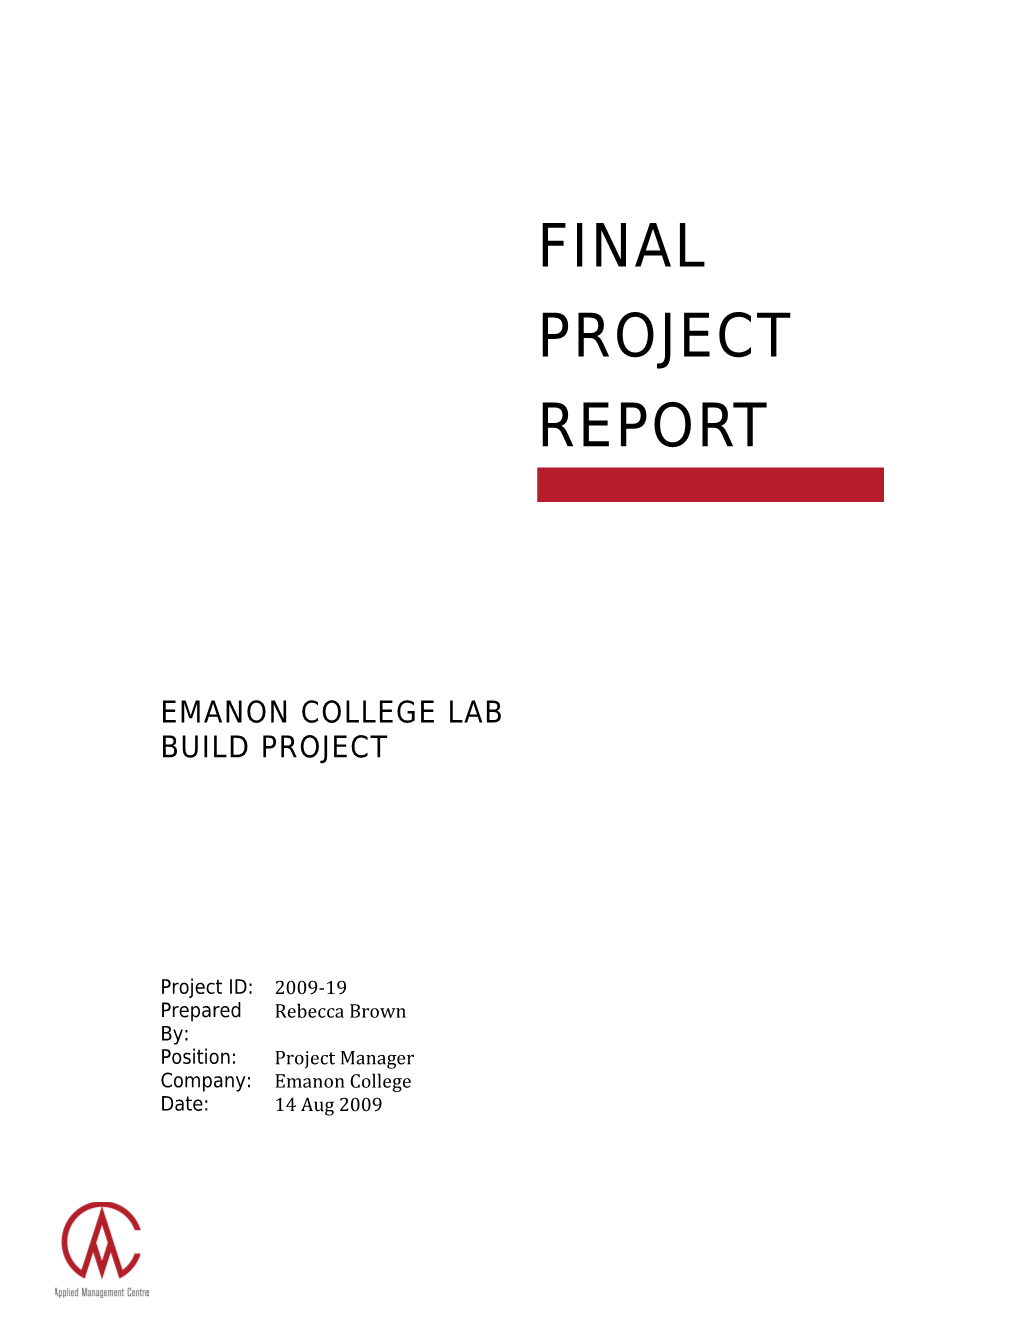 Emanon College Lab Build Project A1